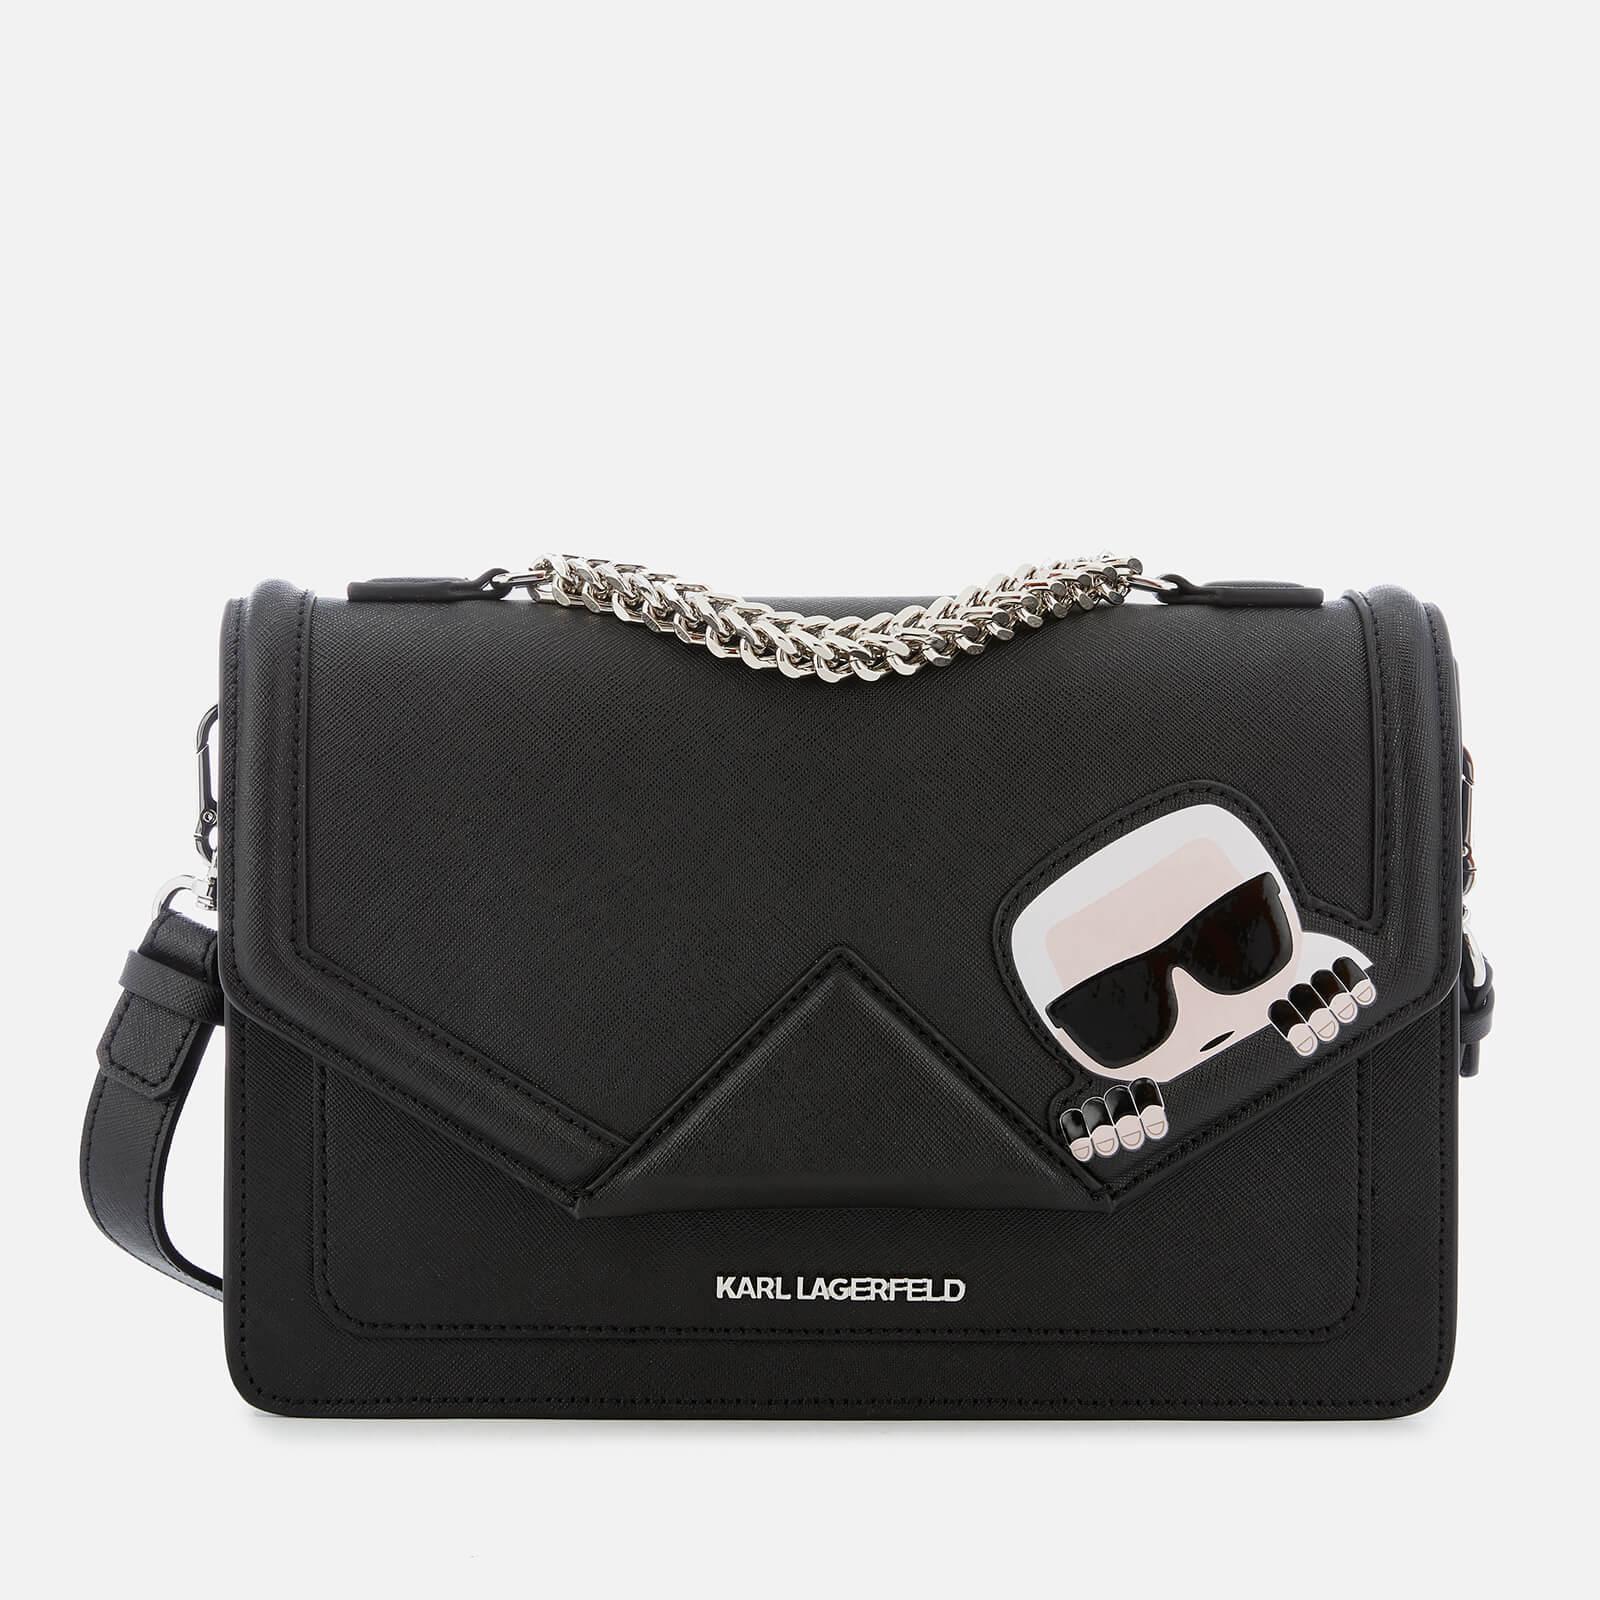 Karl Lagerfeld K/ikonik Classic Shoulder Bag in Black - Save 38% - Lyst